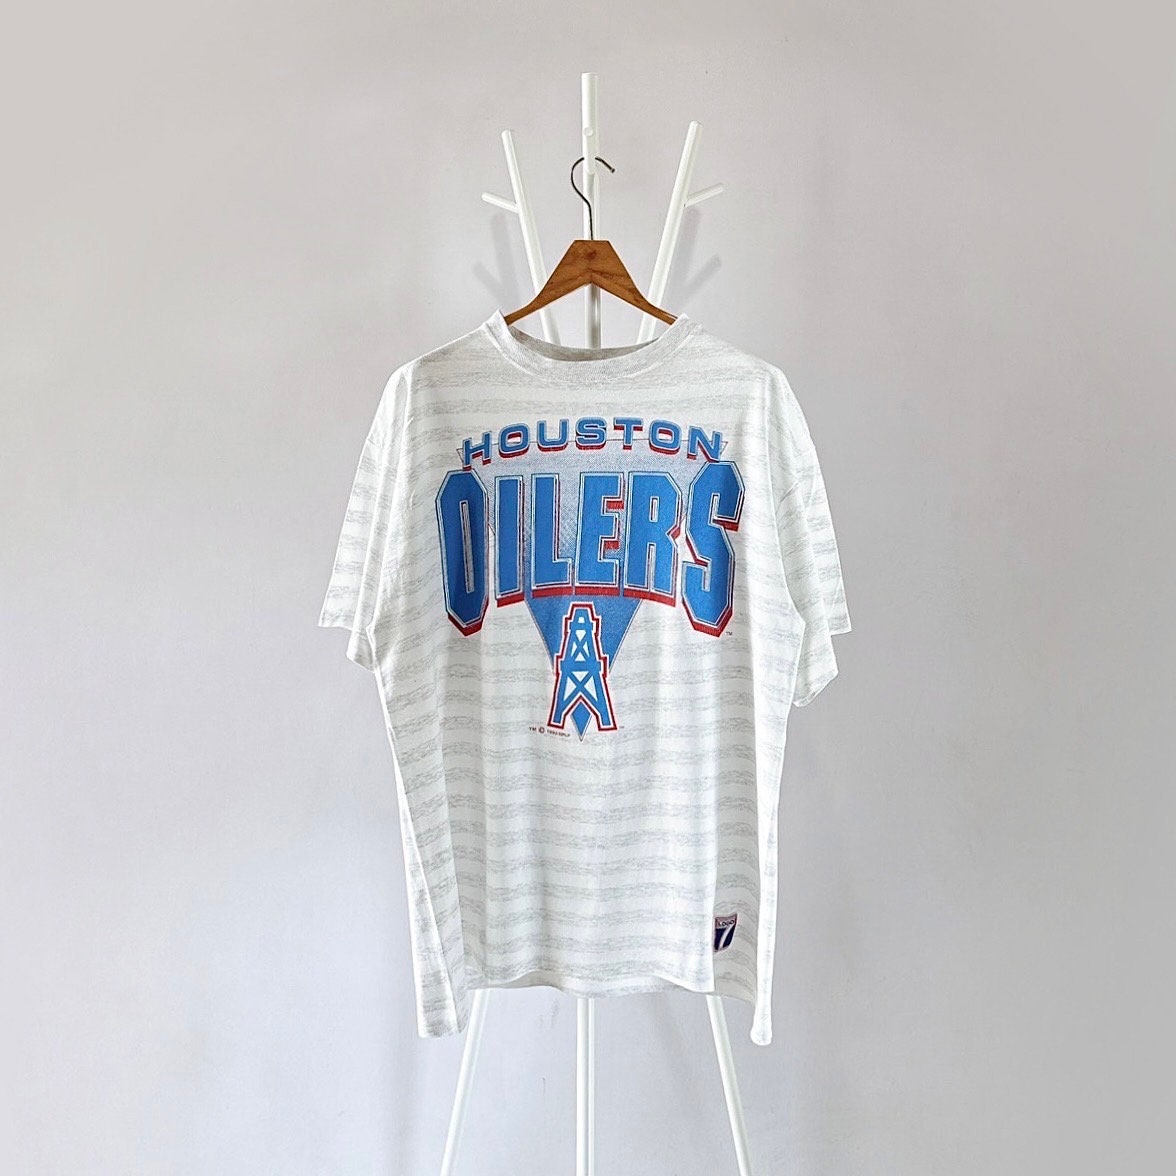 Houston Oilers NFL Team Shirt jersey shirt